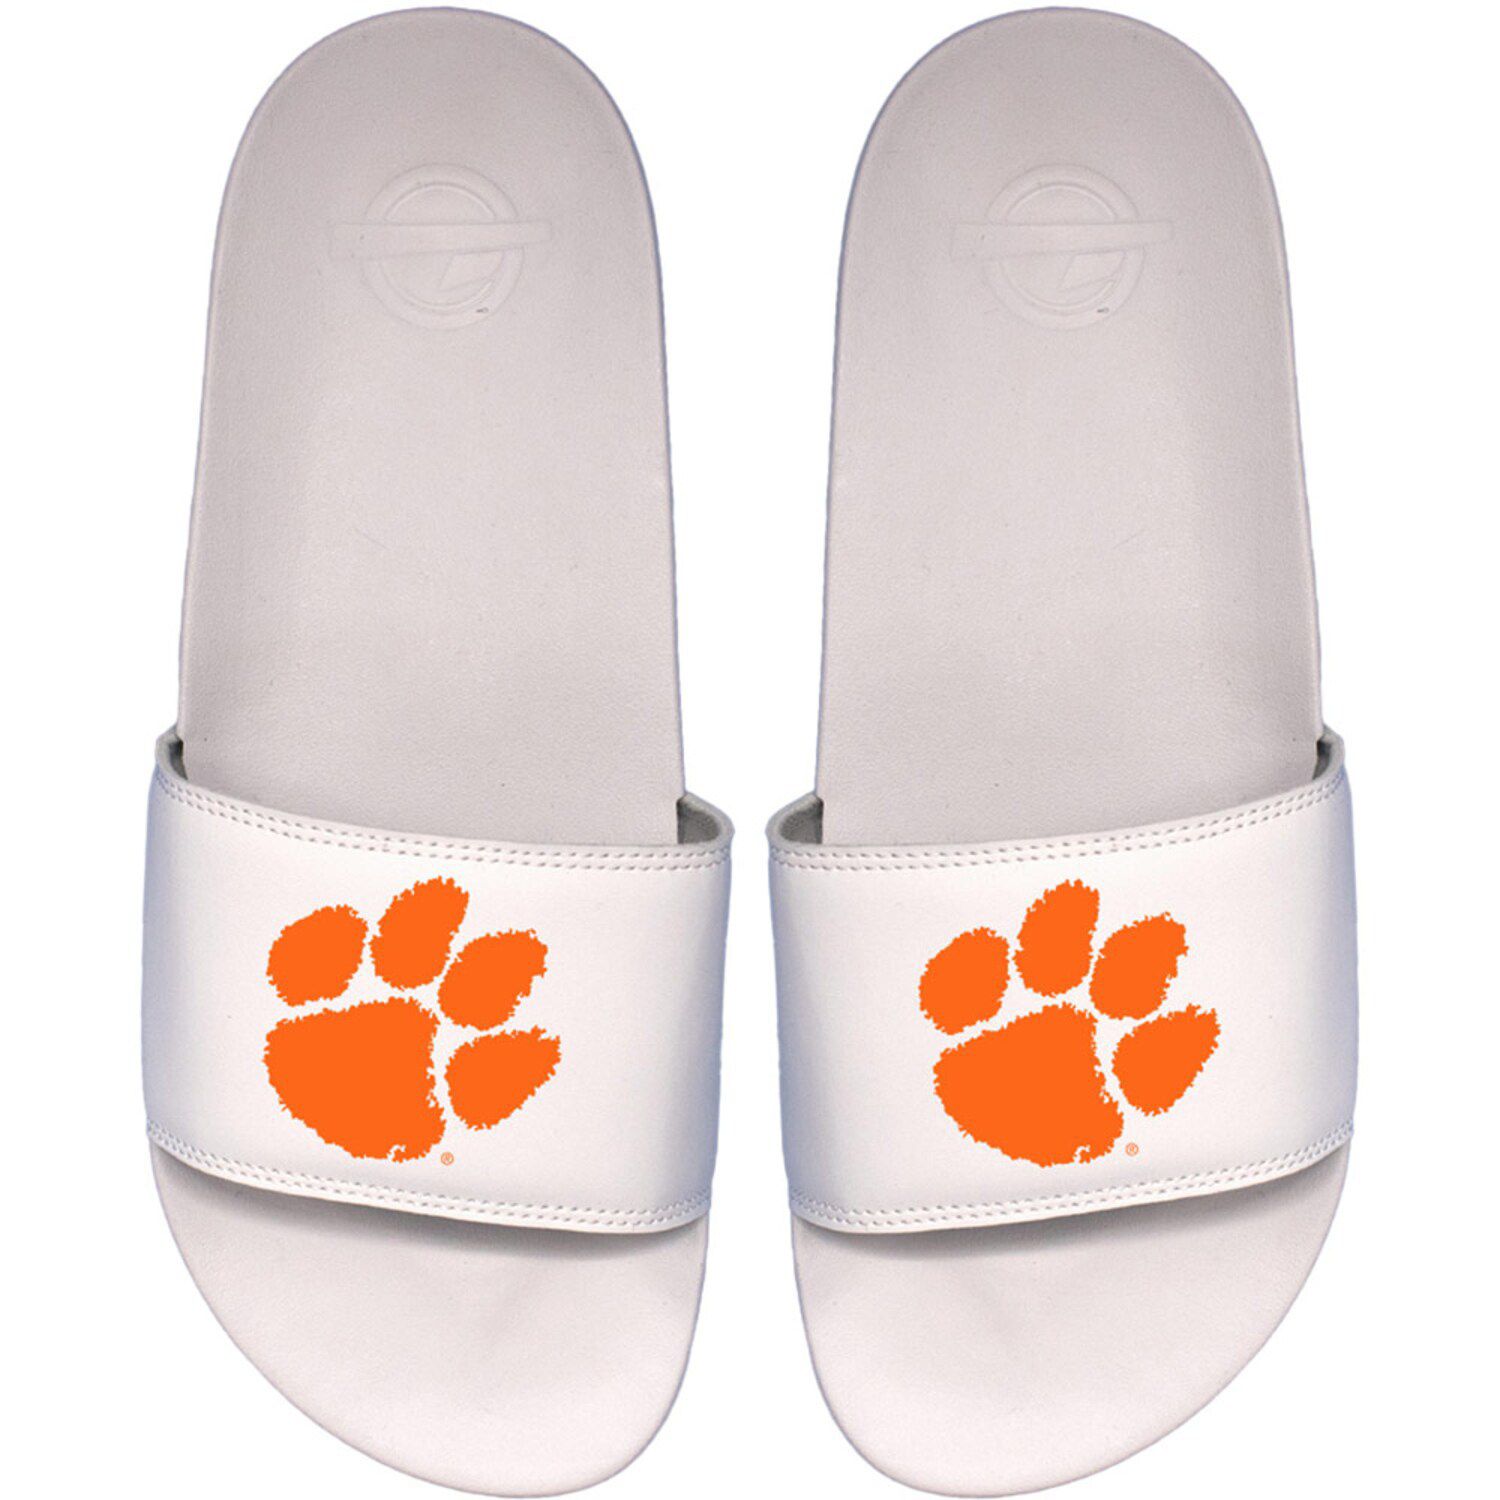 Image for Unbranded Men's ISlide White Clemson Tigers Primary Motto Slide Sandals at Kohl's.